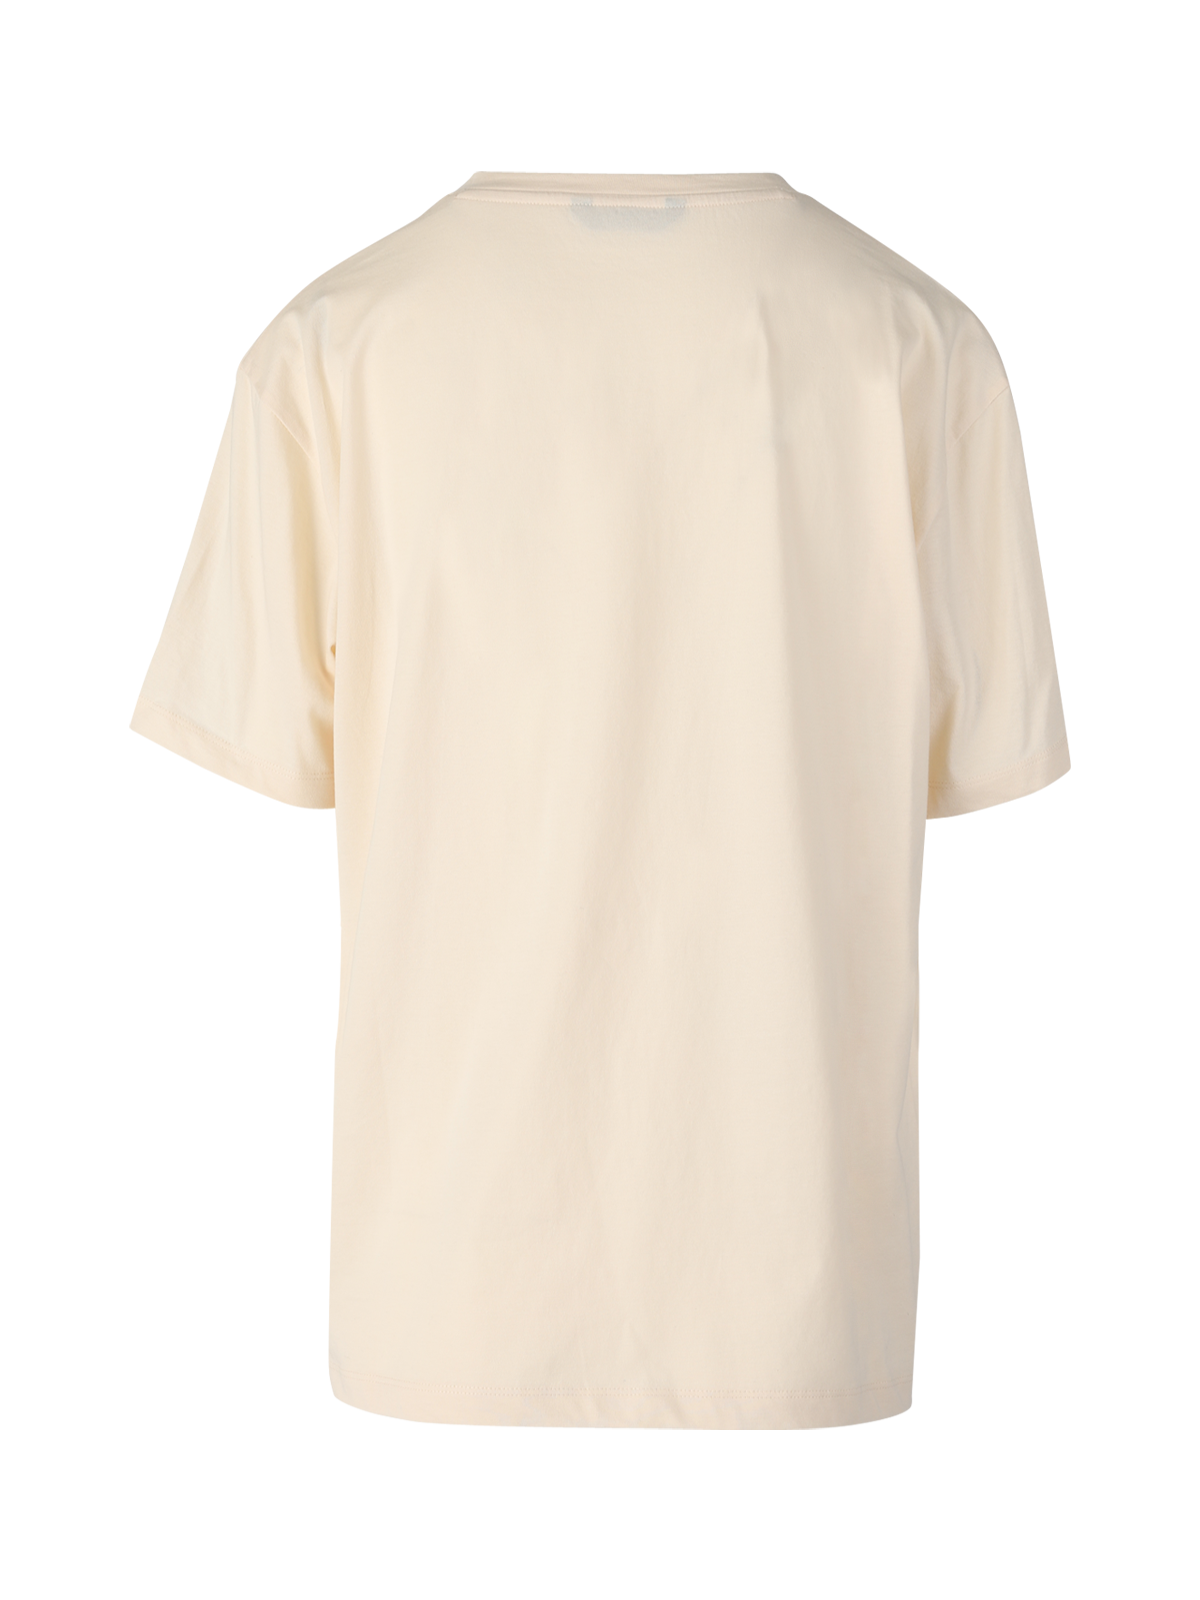 Soraya-R Damen T-Shirt | Weiß